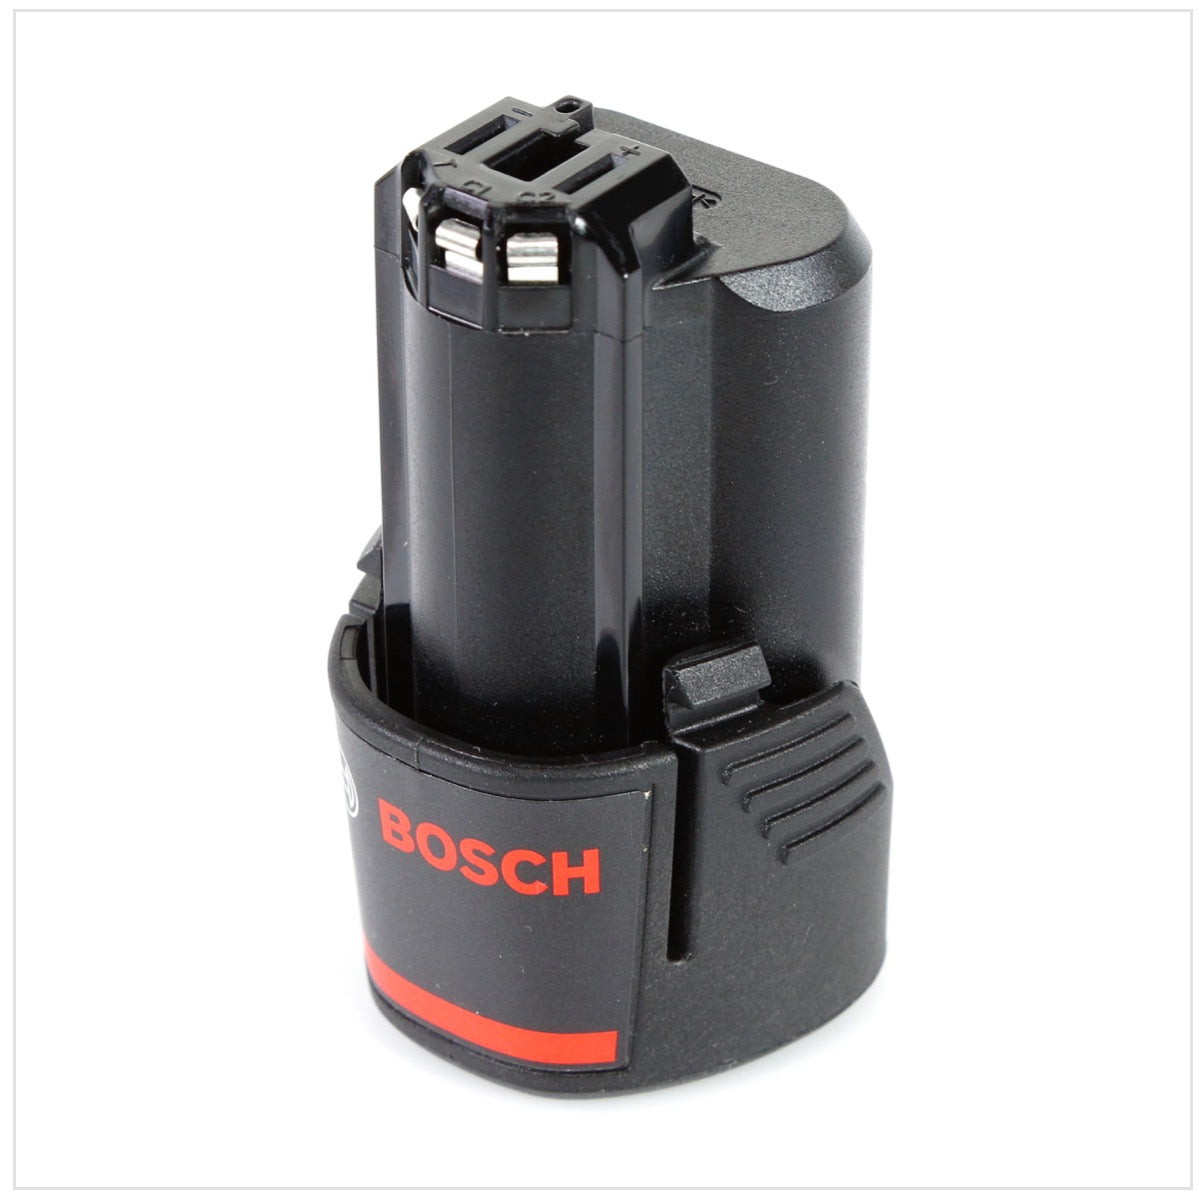 Bosch Starter-Set 12 V mit 2x GBA 12 V 3,0 Ah Akku und GAL 1230 CV Ladegerät